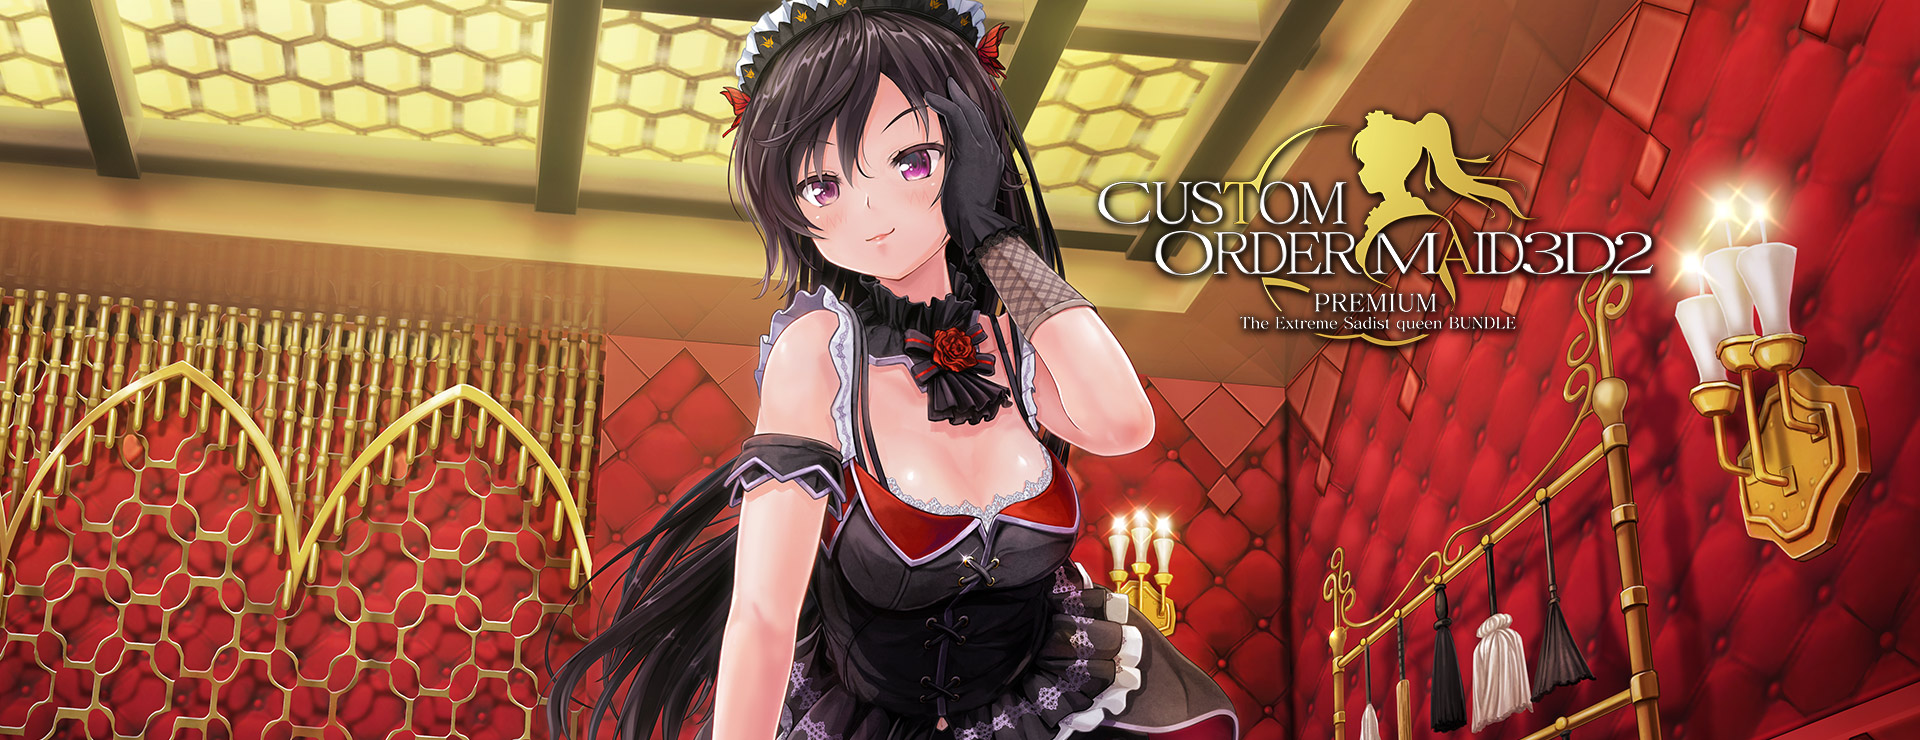 Custom Order Maid 3D2: Extreme Sadist Queen Bundle - Simulation Jeu